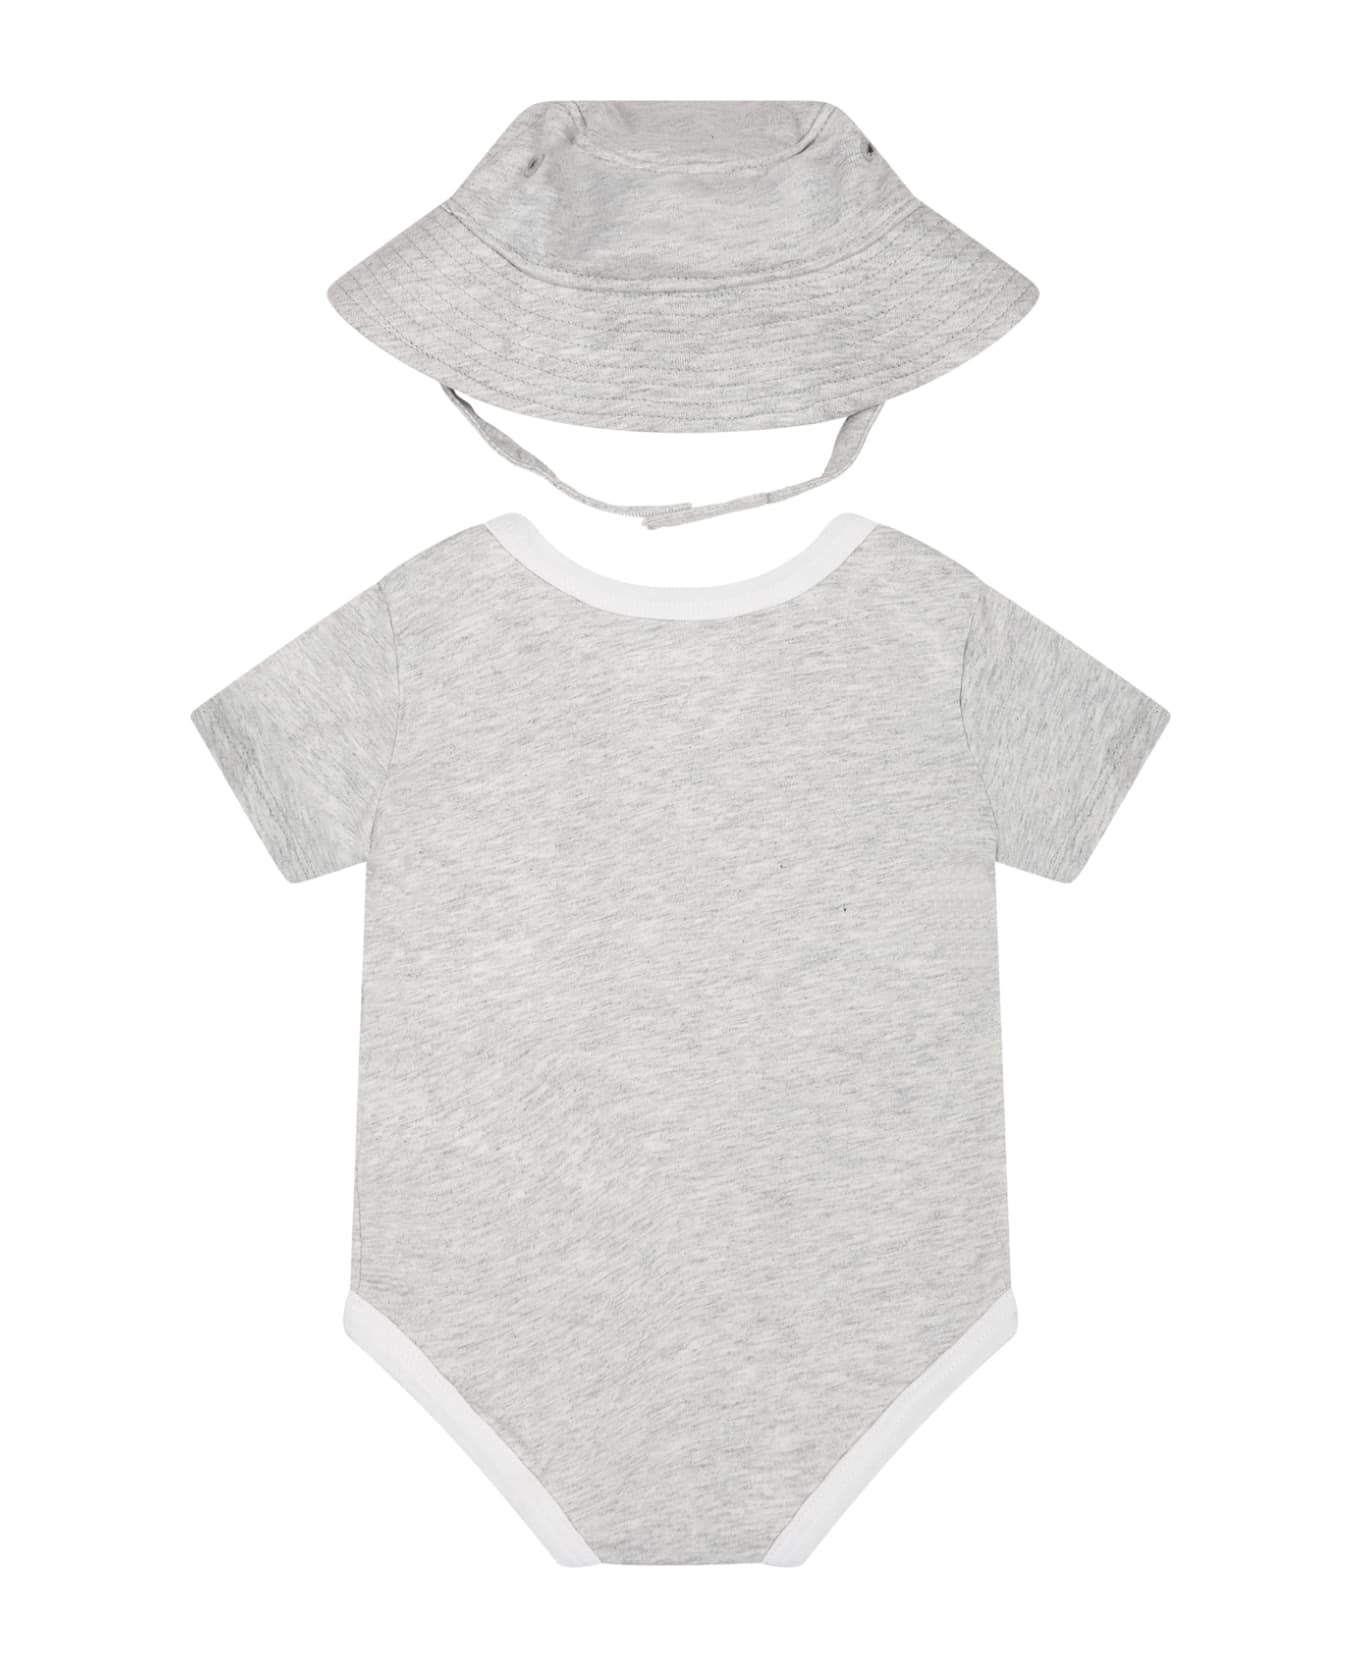 Nike Grey Set For Baby Kids With Logo - Grey